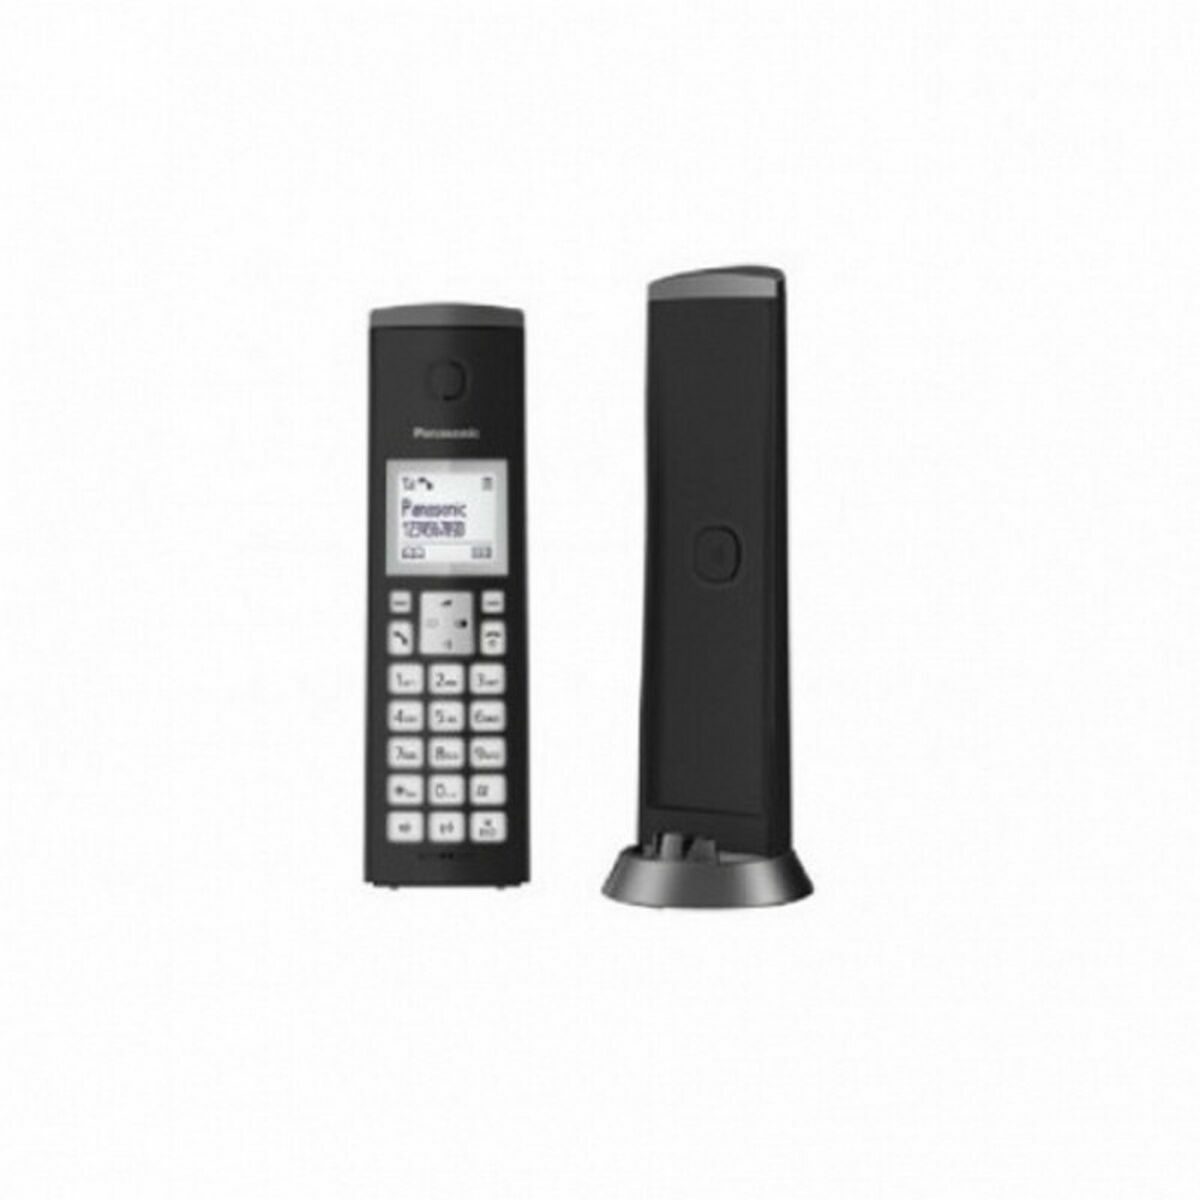 Teléfono Inalámbrico Panasonic KX-TGK210 DECT Blanco Negro